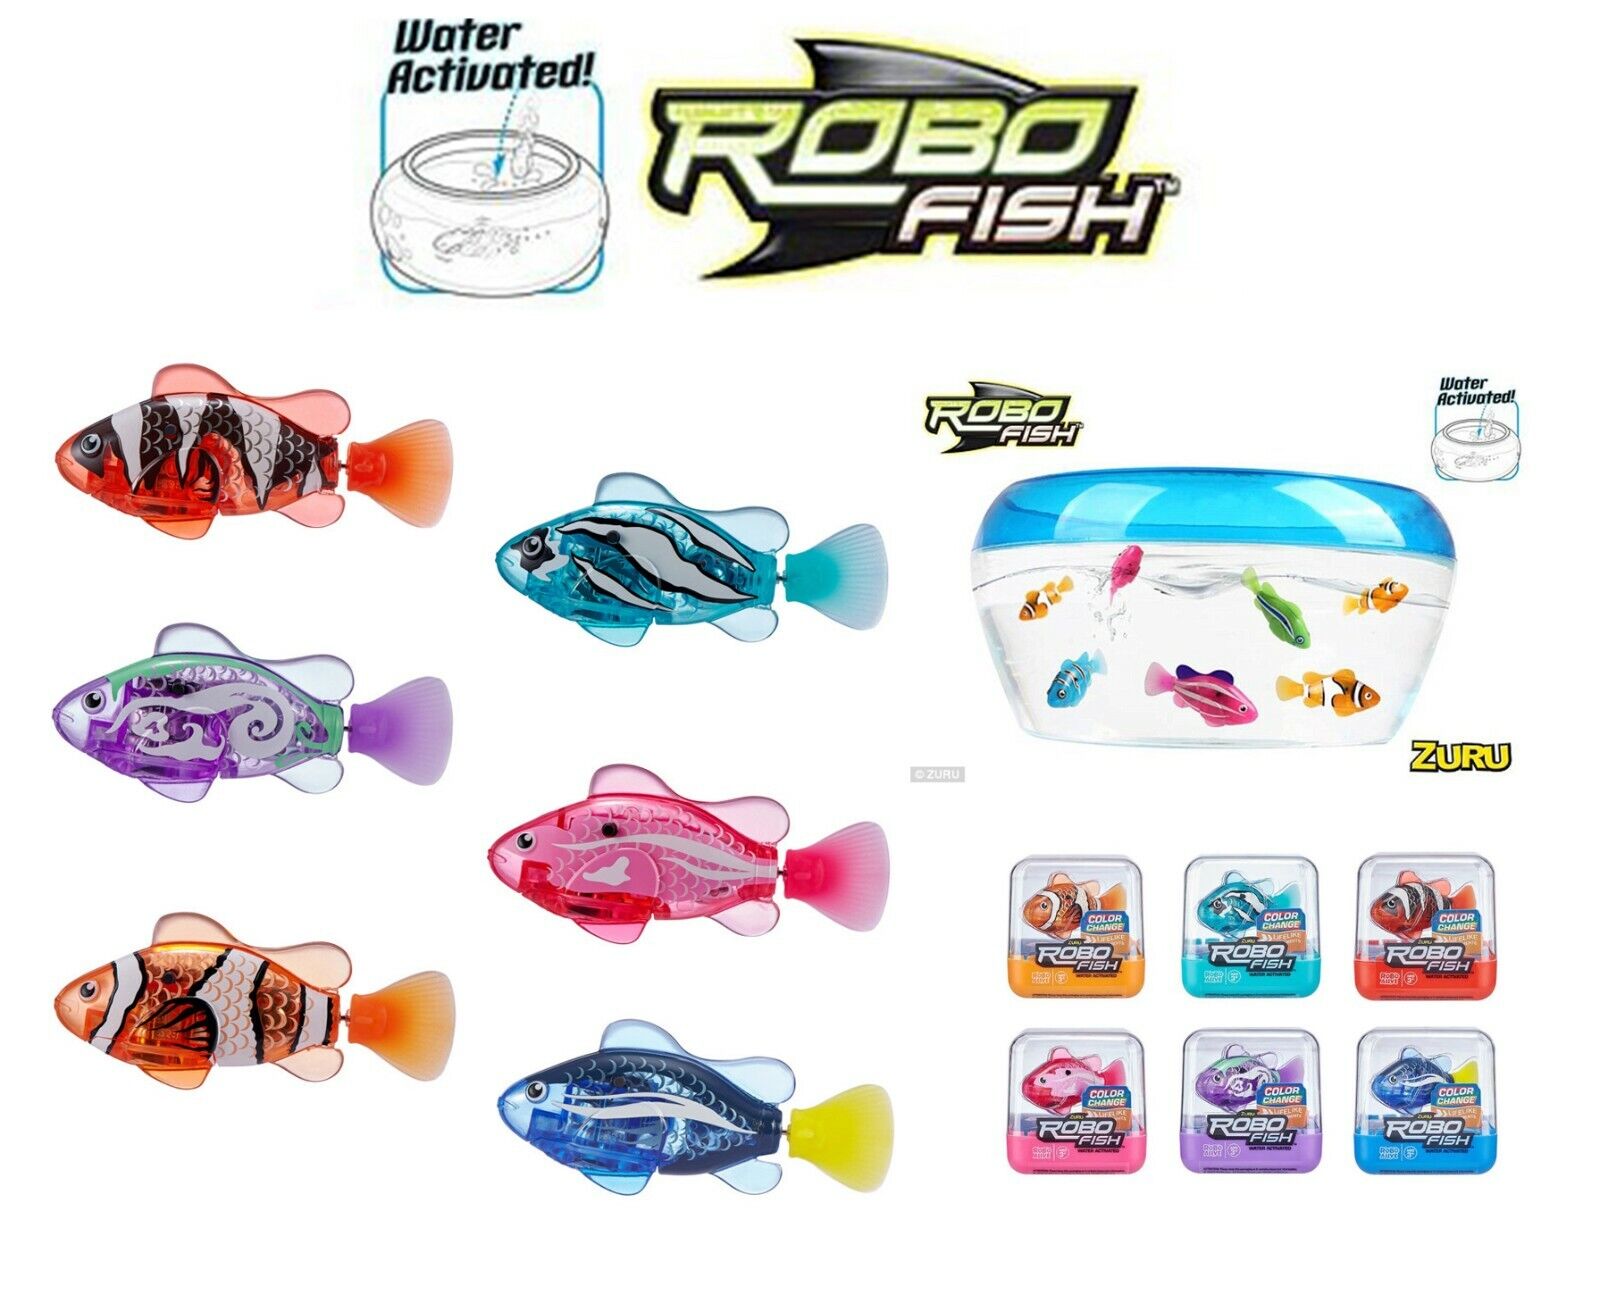  Robot Fish